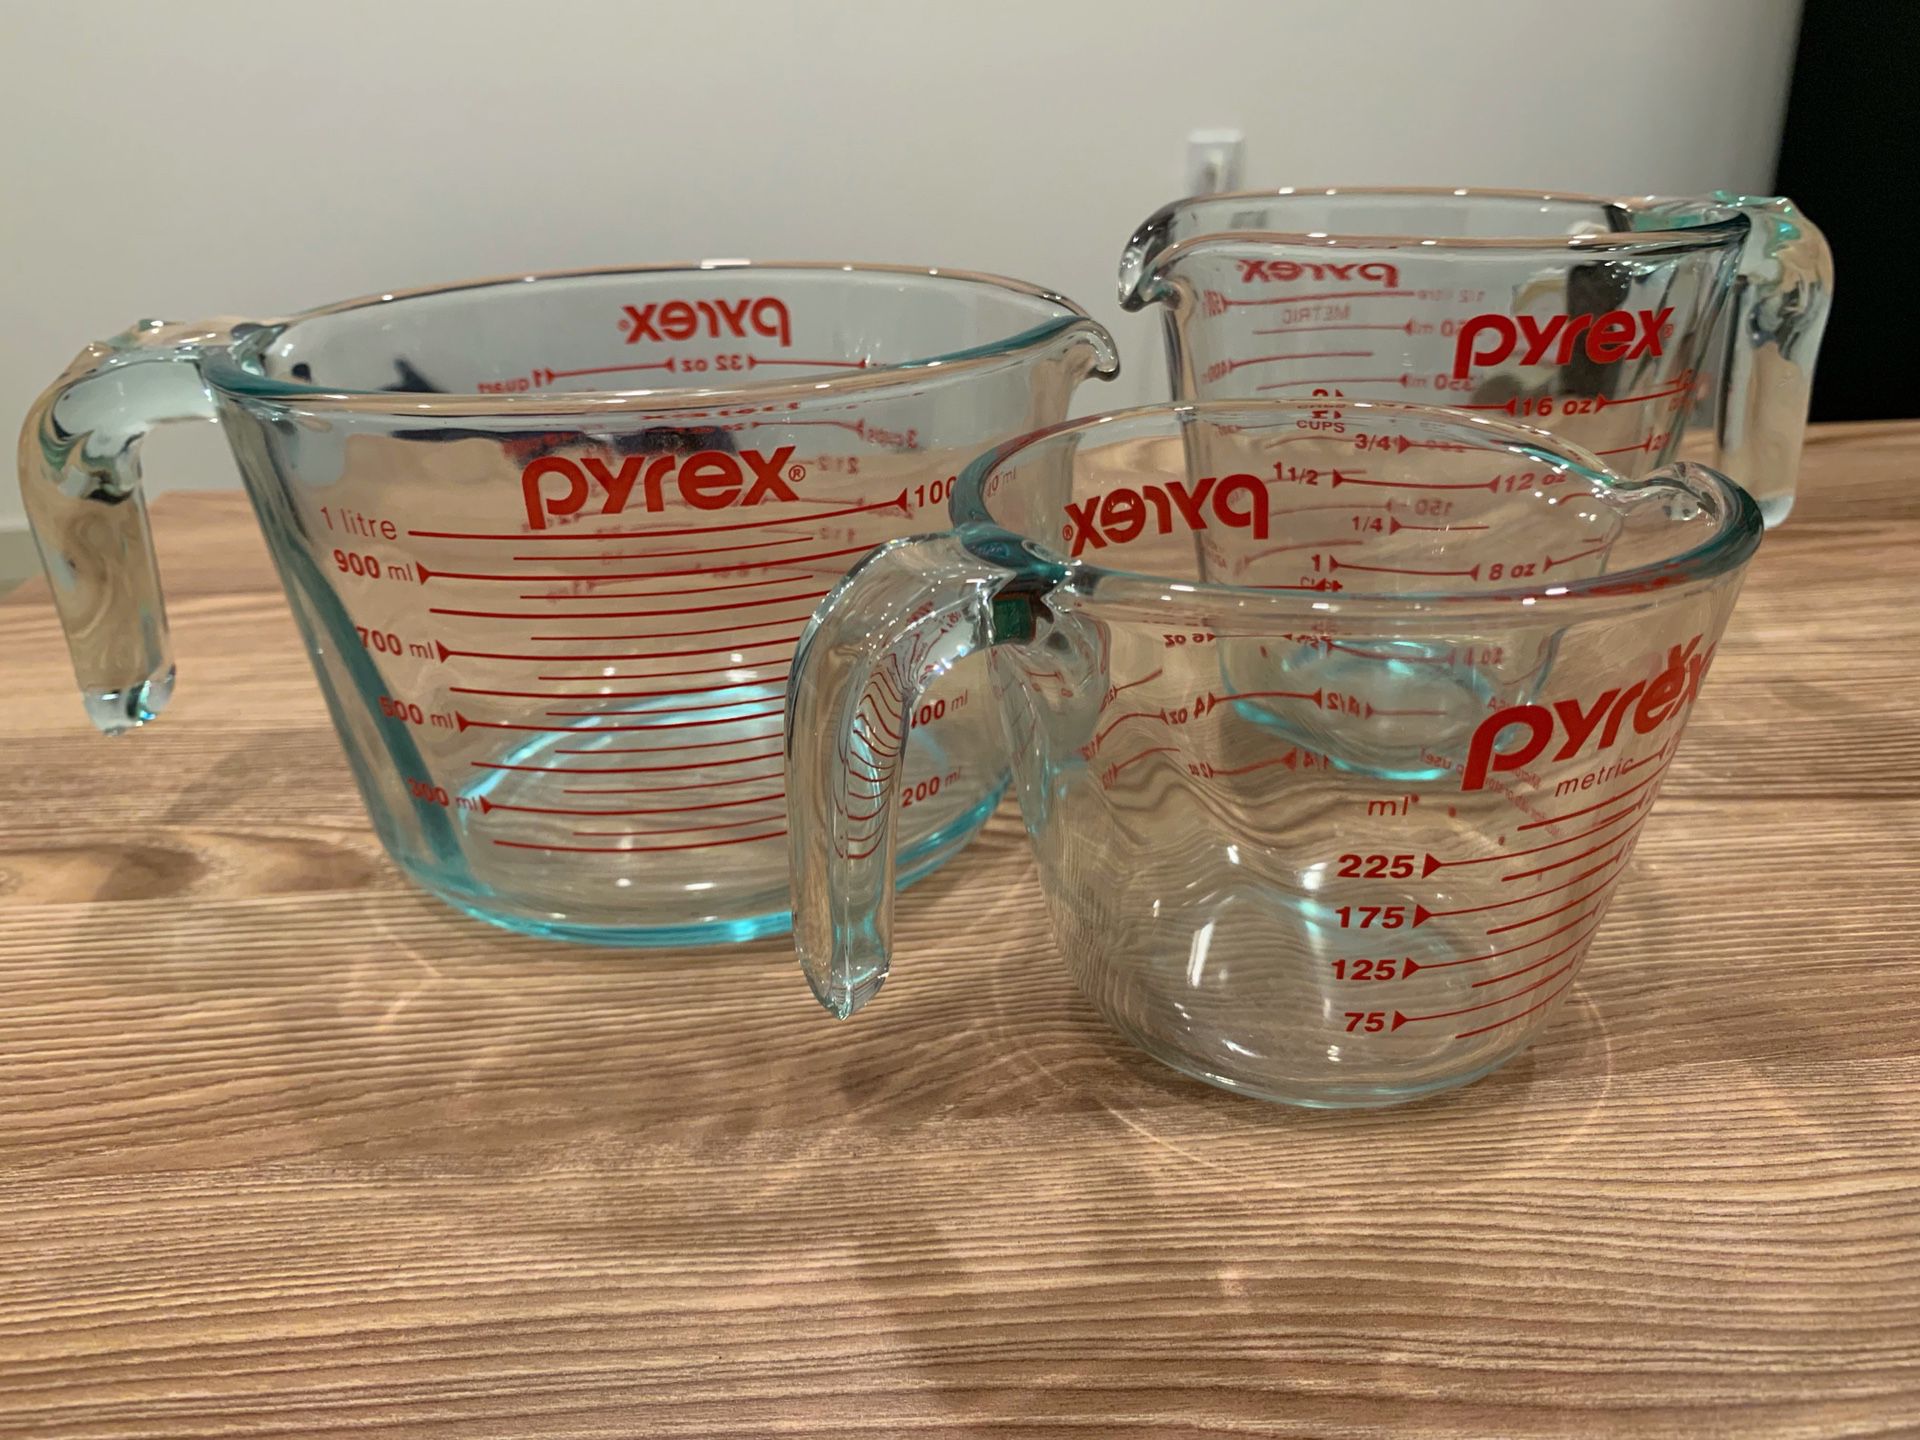 Pyrex 3 piece glass set for sale